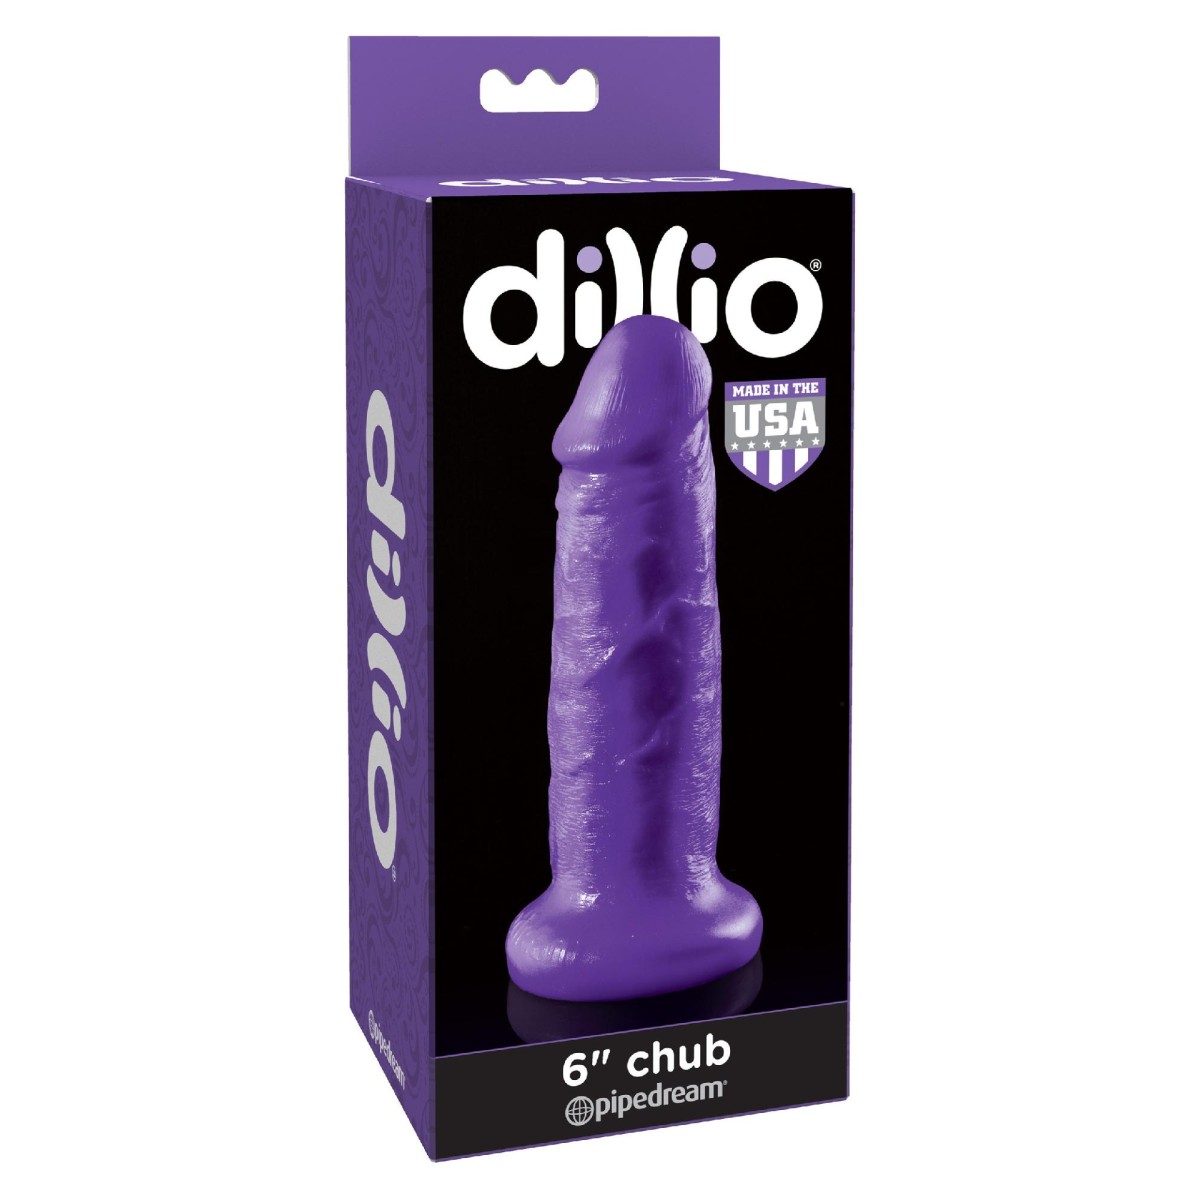 Fallo Chub 6 Inch dillio purple